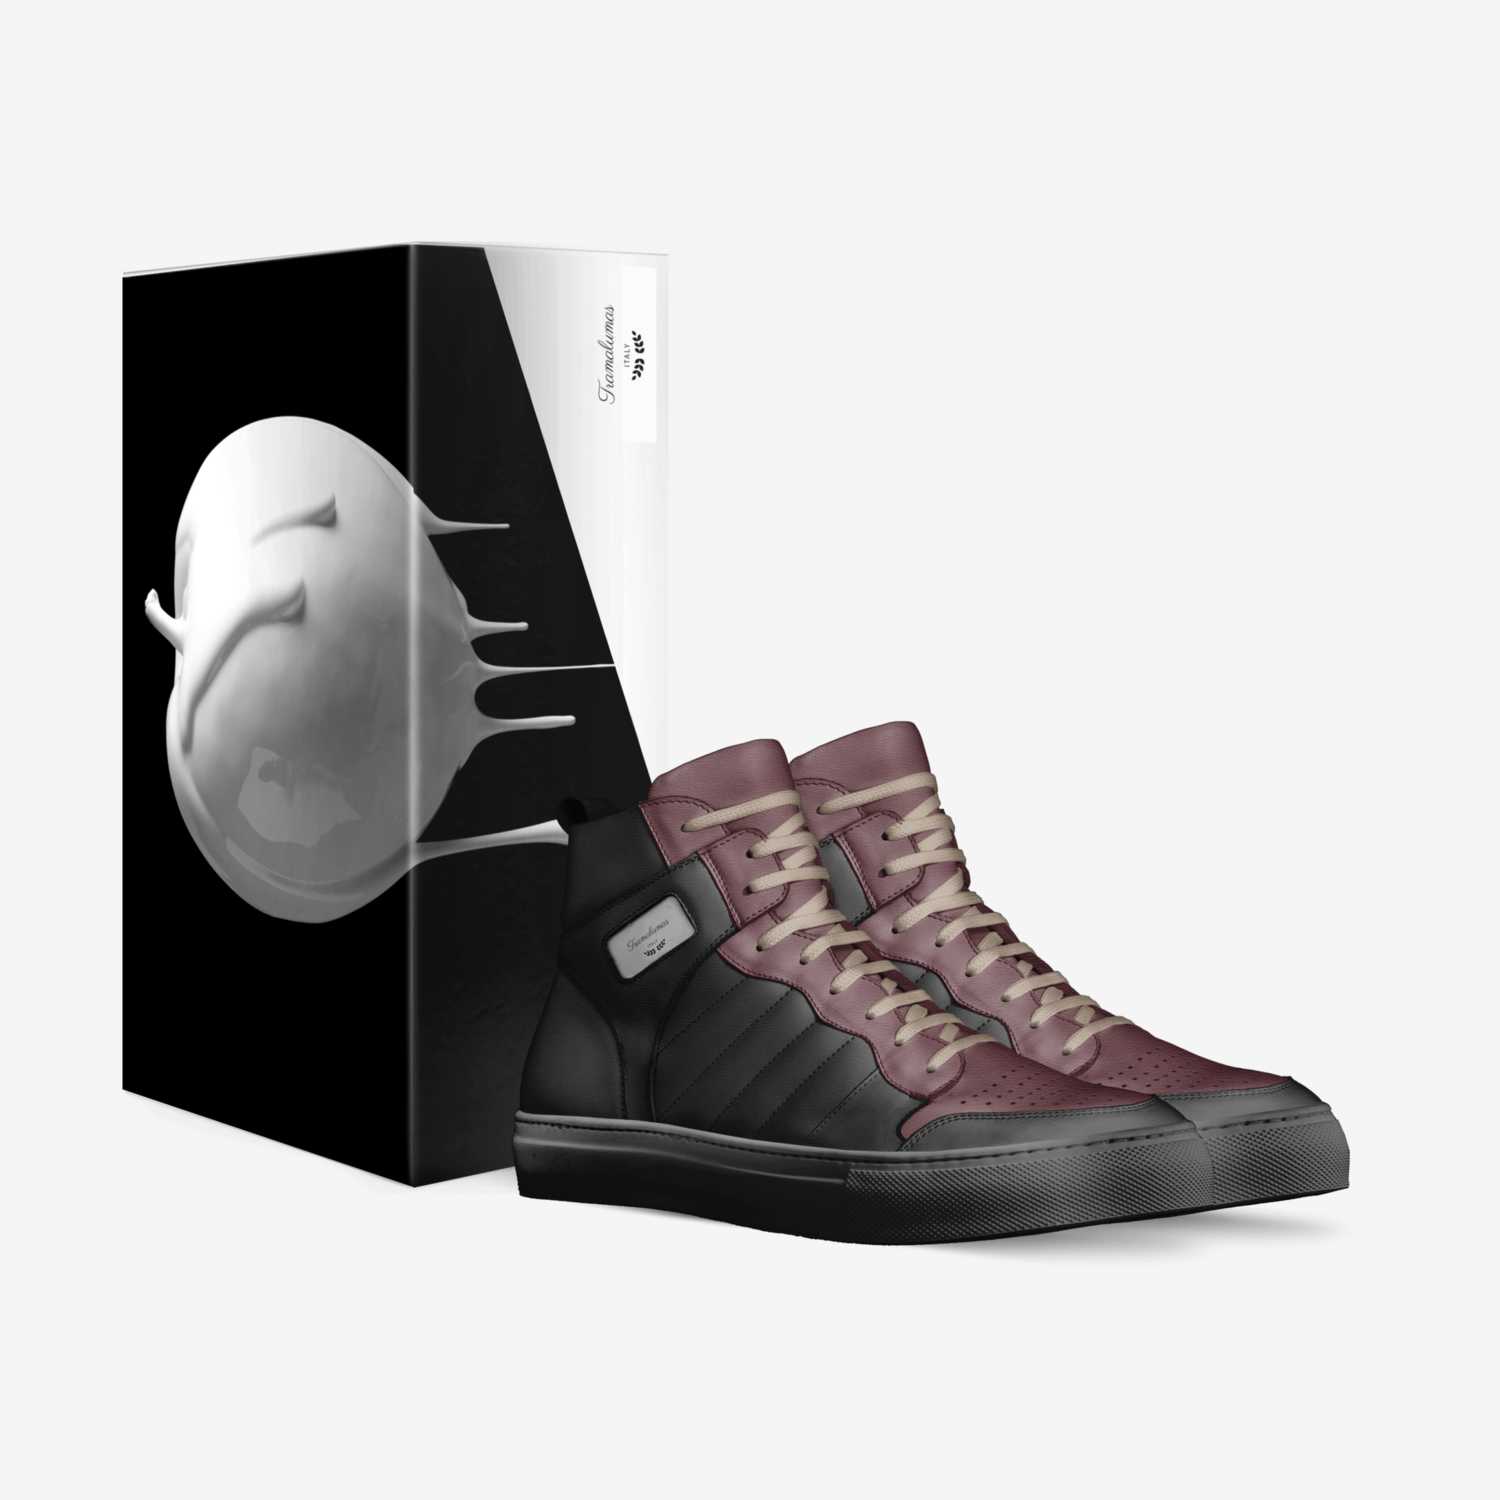 Tramalumas custom made in Italy shoes by Stephanie Ramirez | Box view